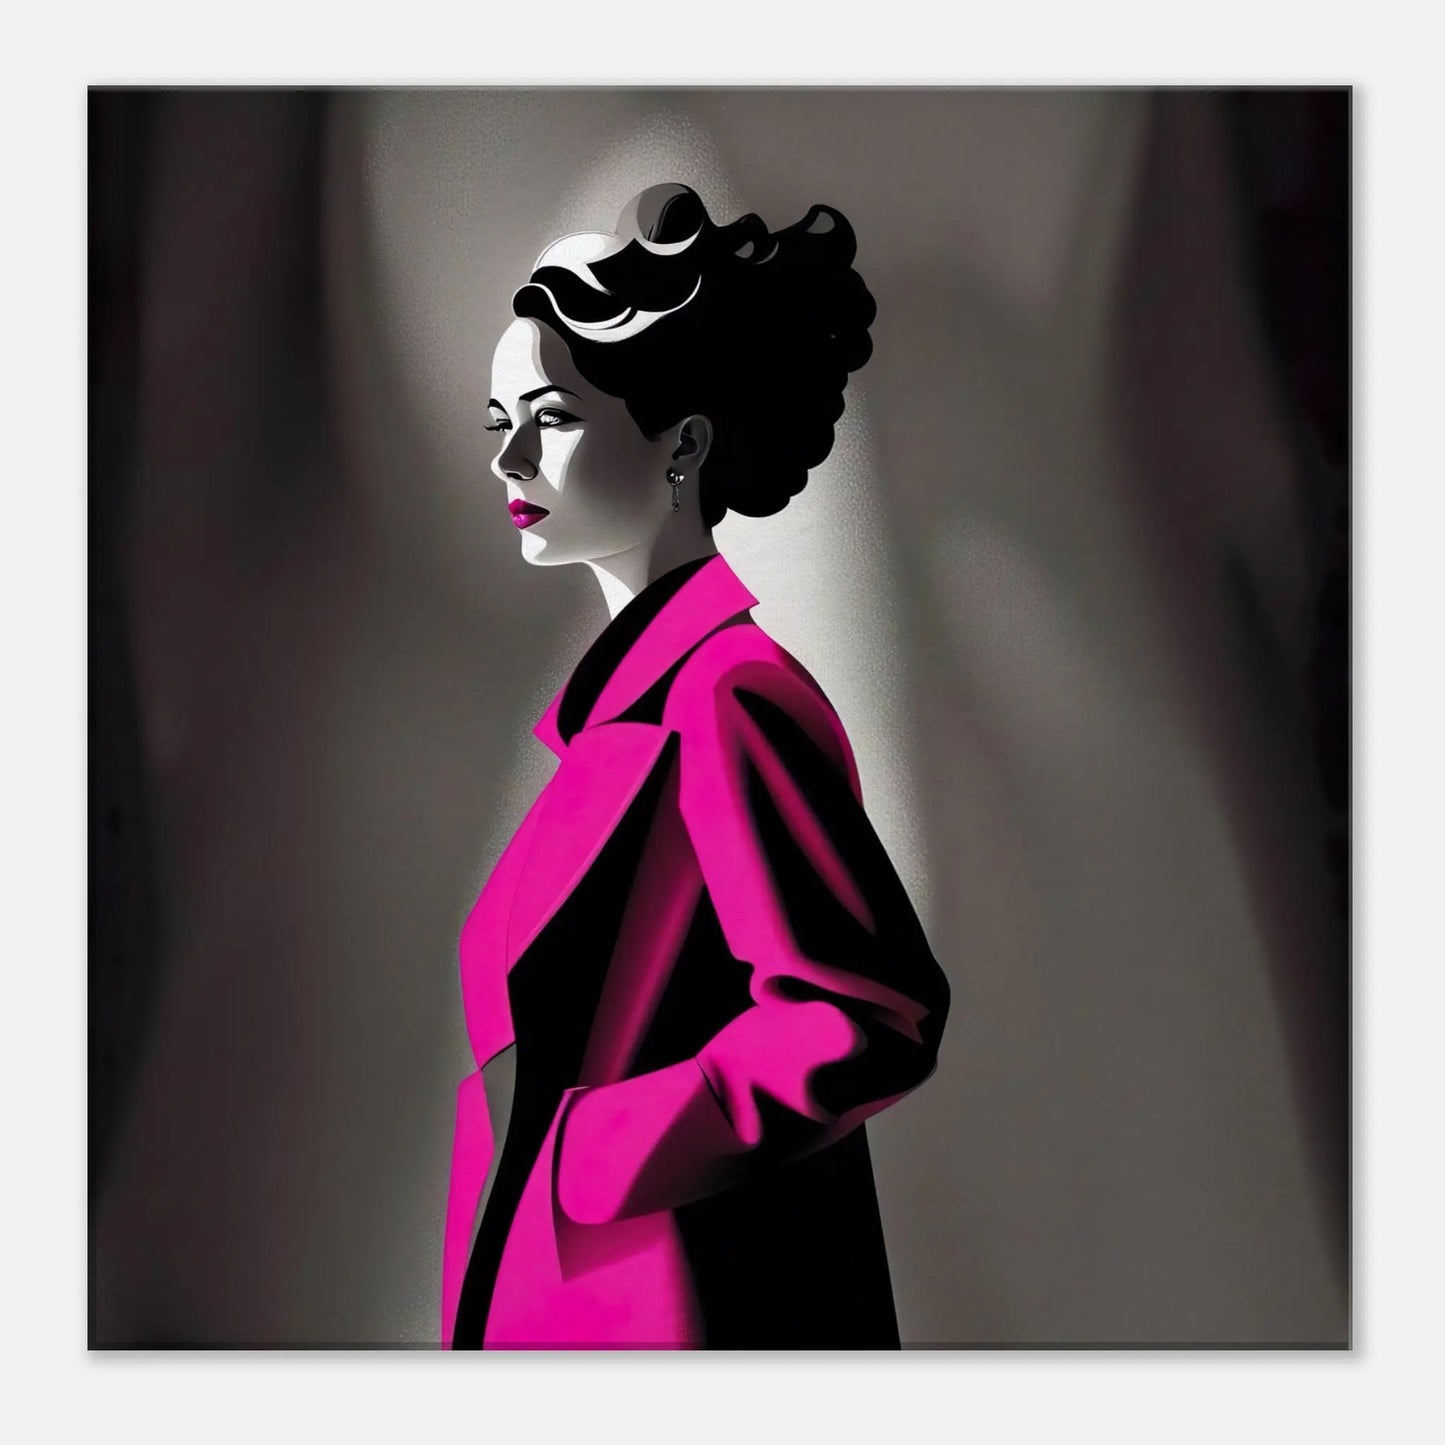 Leinwandbild - Frau im rosa Mantel - Schwarz-Weiß Stil, KI-Kunst - RolConArt, Schwarz-Weiß mit Akzentfarben, 50x50-cm-20x20